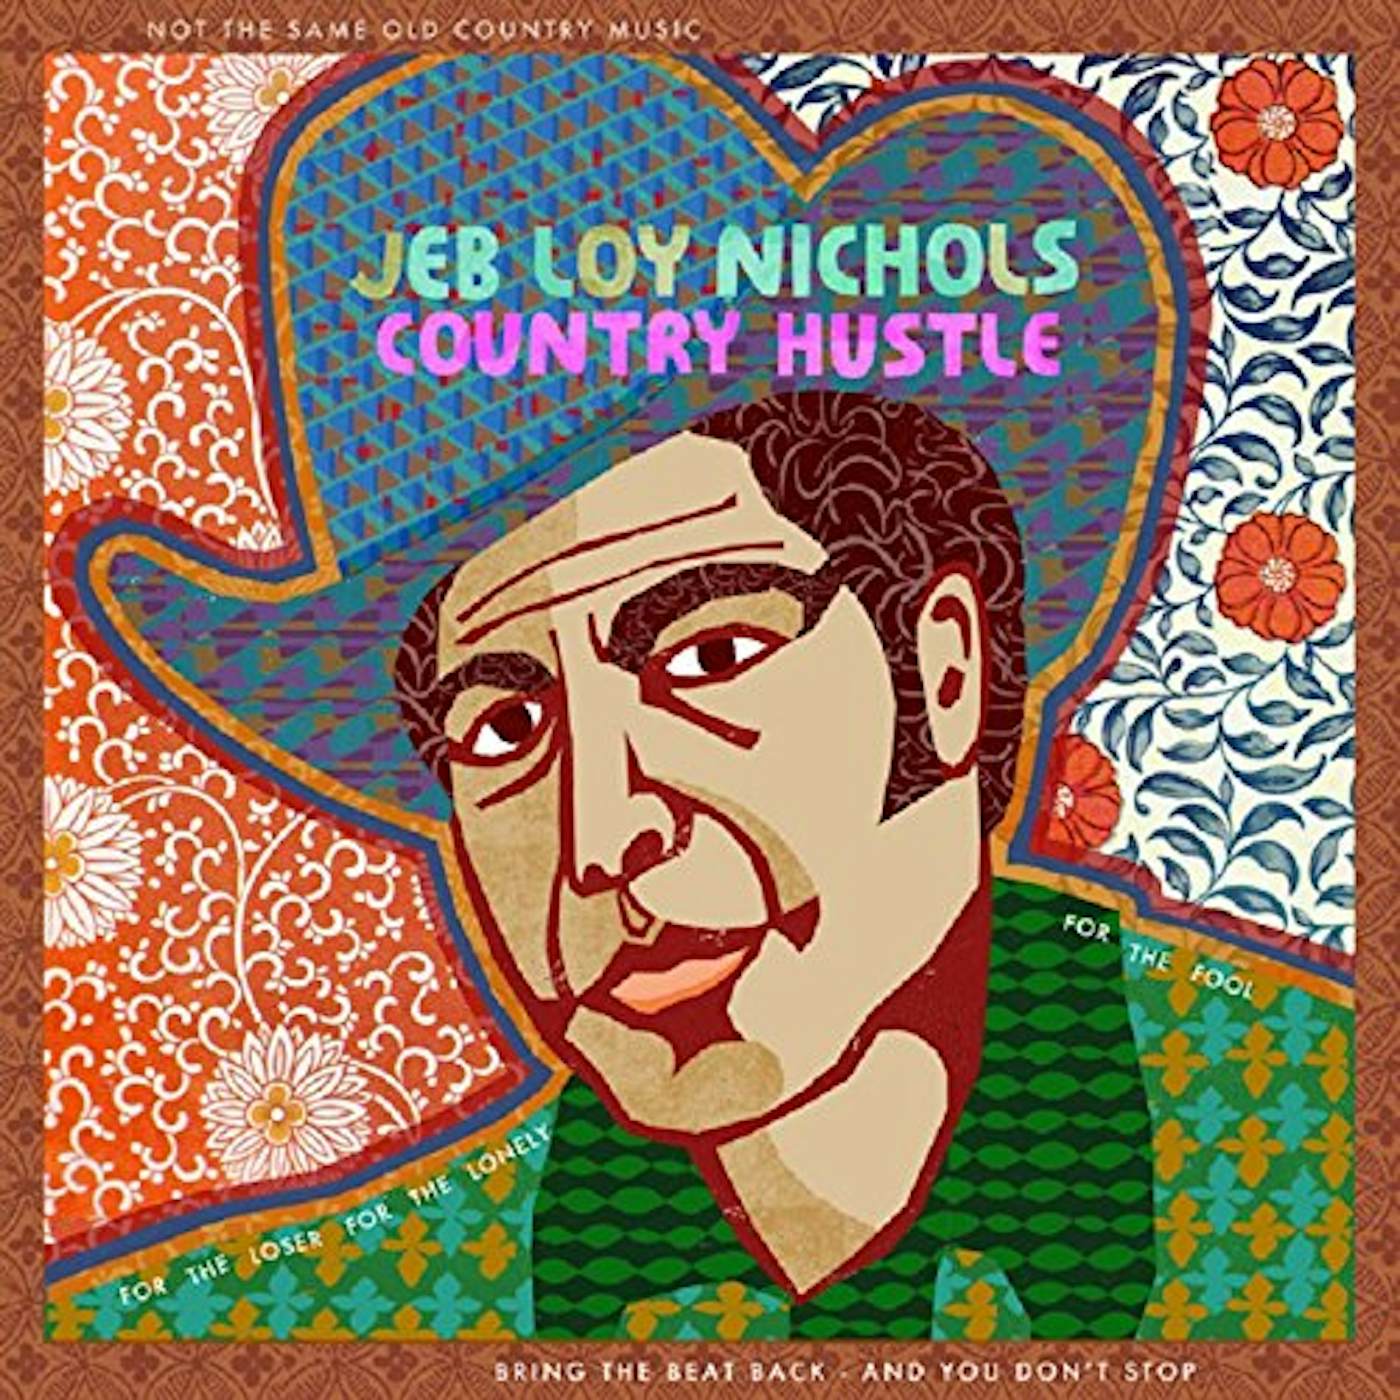 Jeb Loy Nichols COUNTRY HUSTLE CD